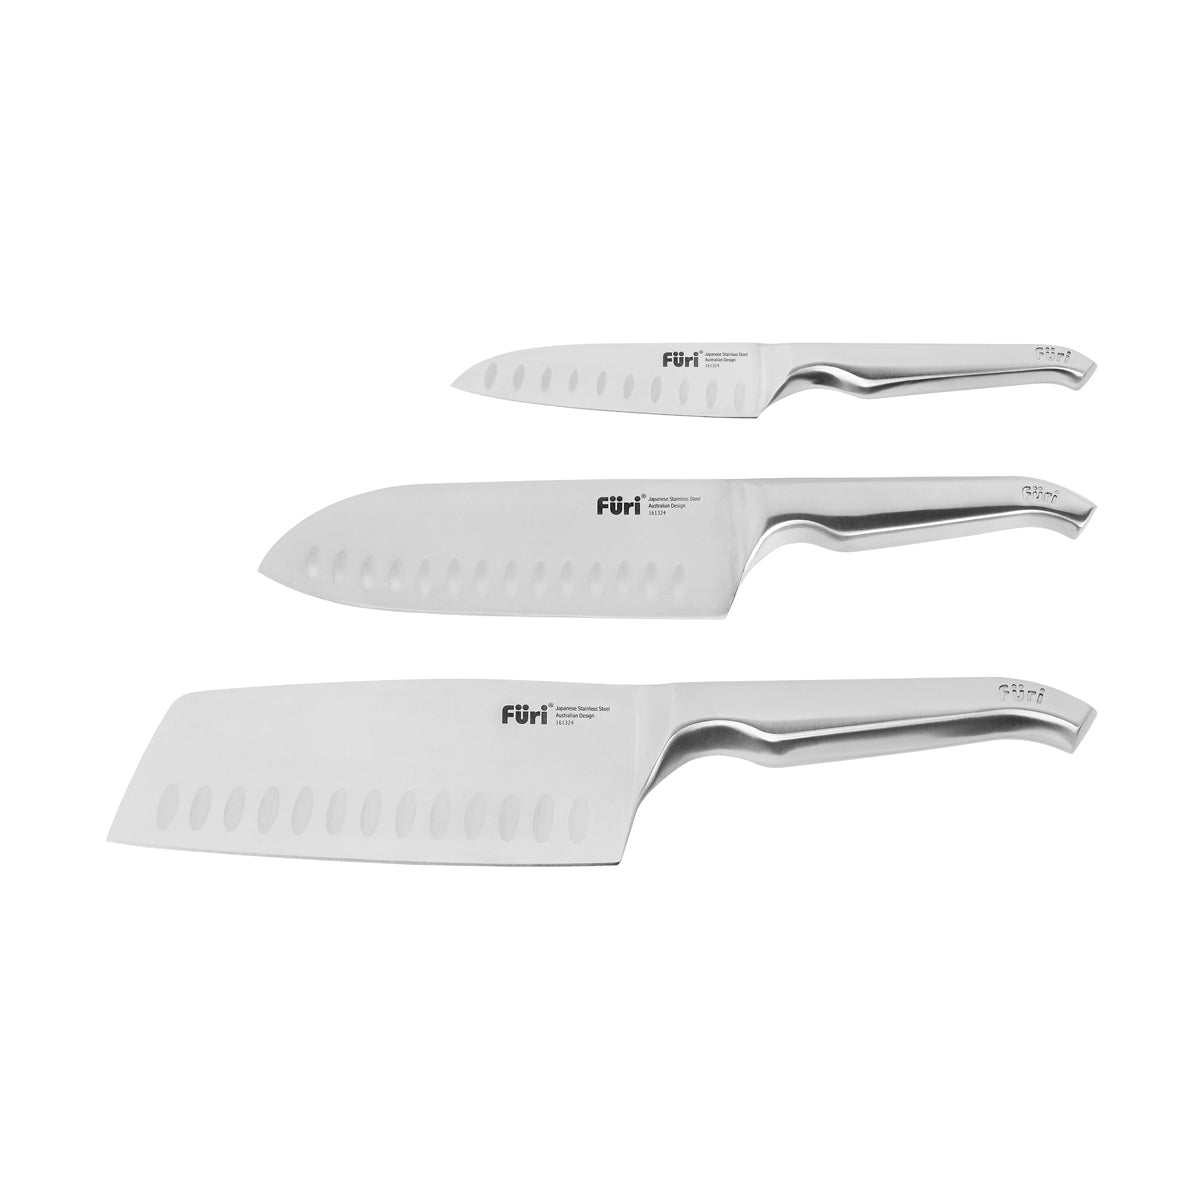 27176 Furi Pro Asian Style Knife Set 3pc Tomkin Australia Hospitality Supplies